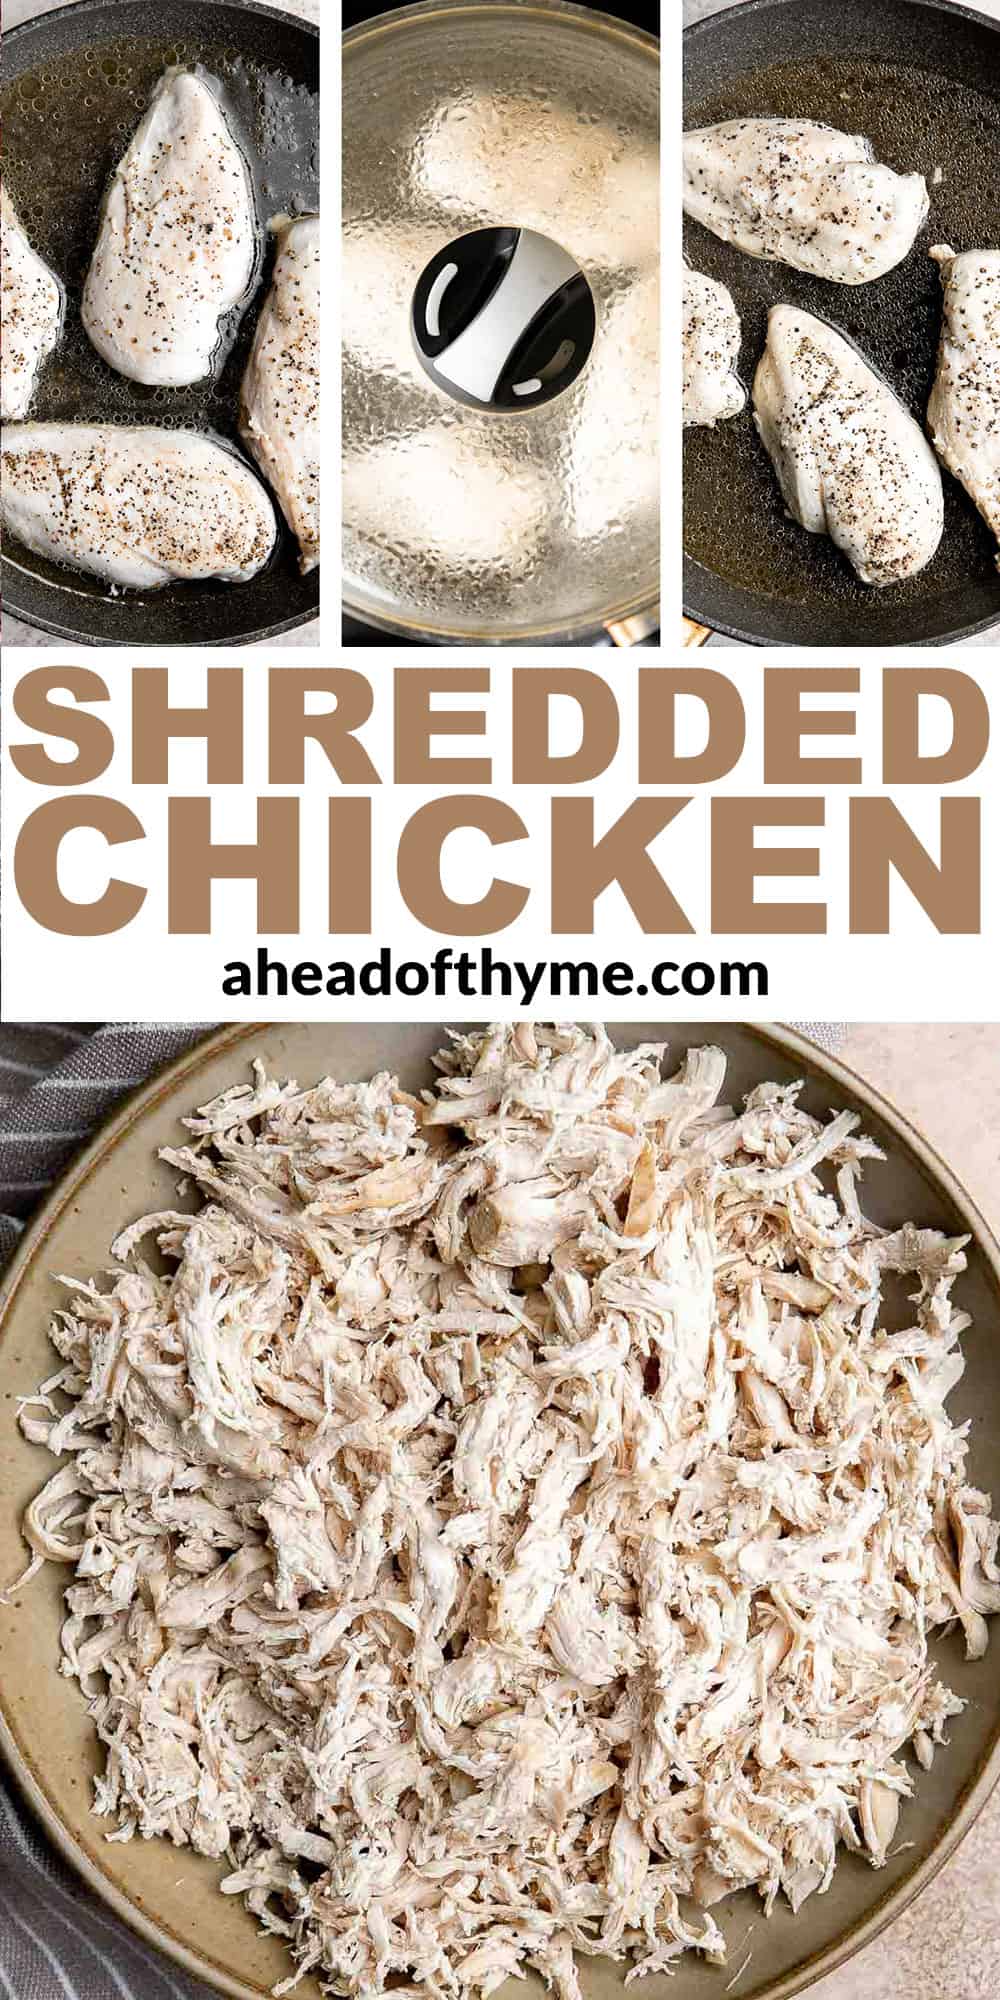 How to Make Shredded Chicken